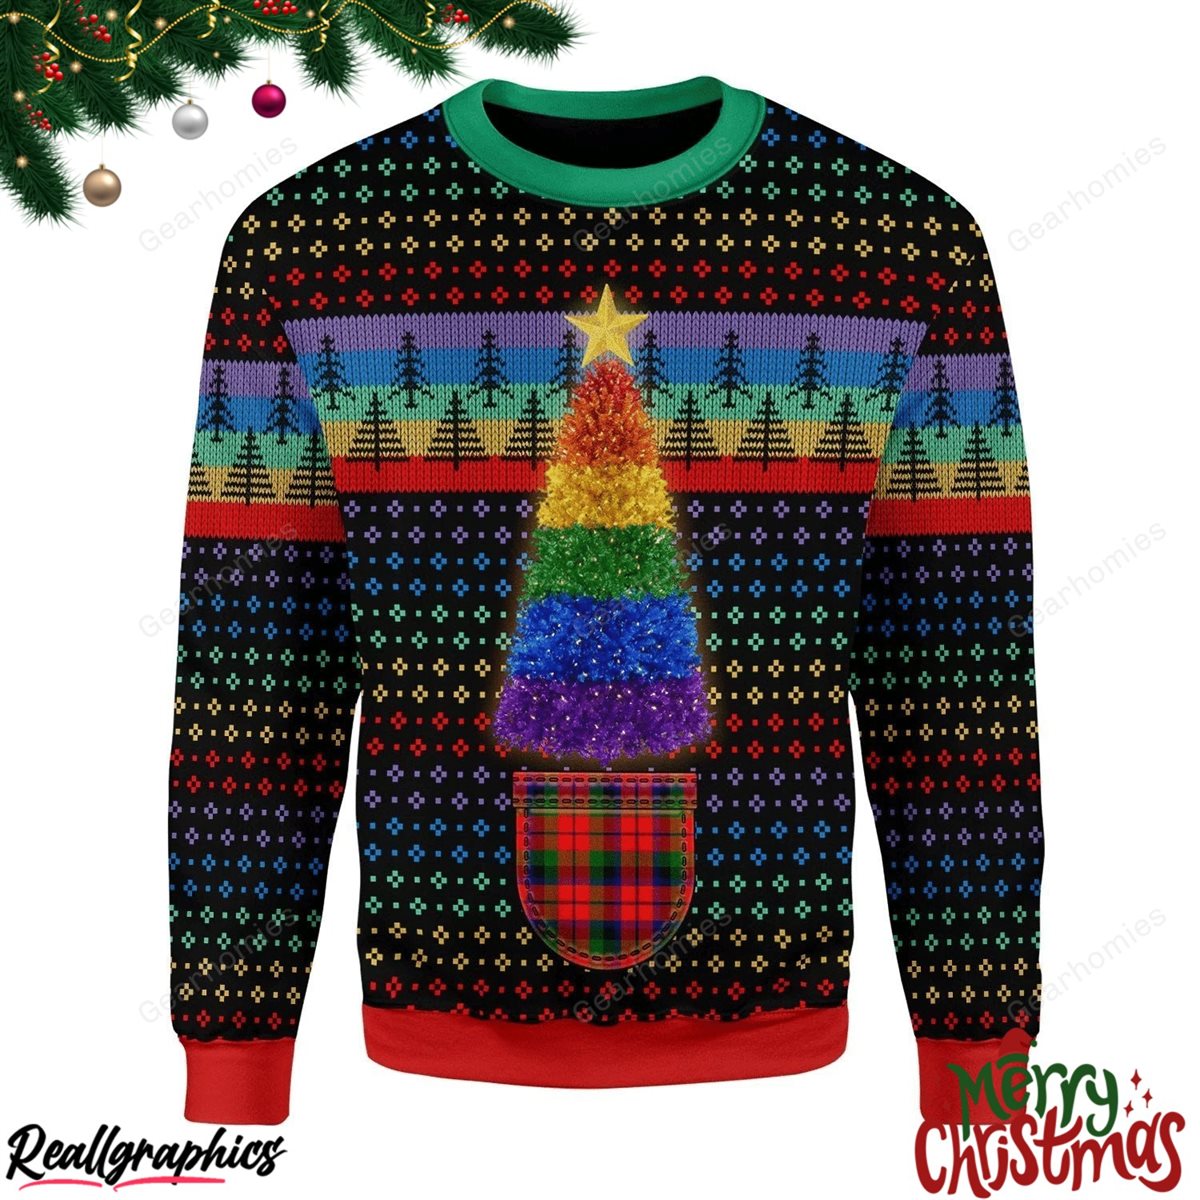 Merry Christmas Lgbtq+ Christmas Tree All Over Print Ugly Sweatshirt, Sweater